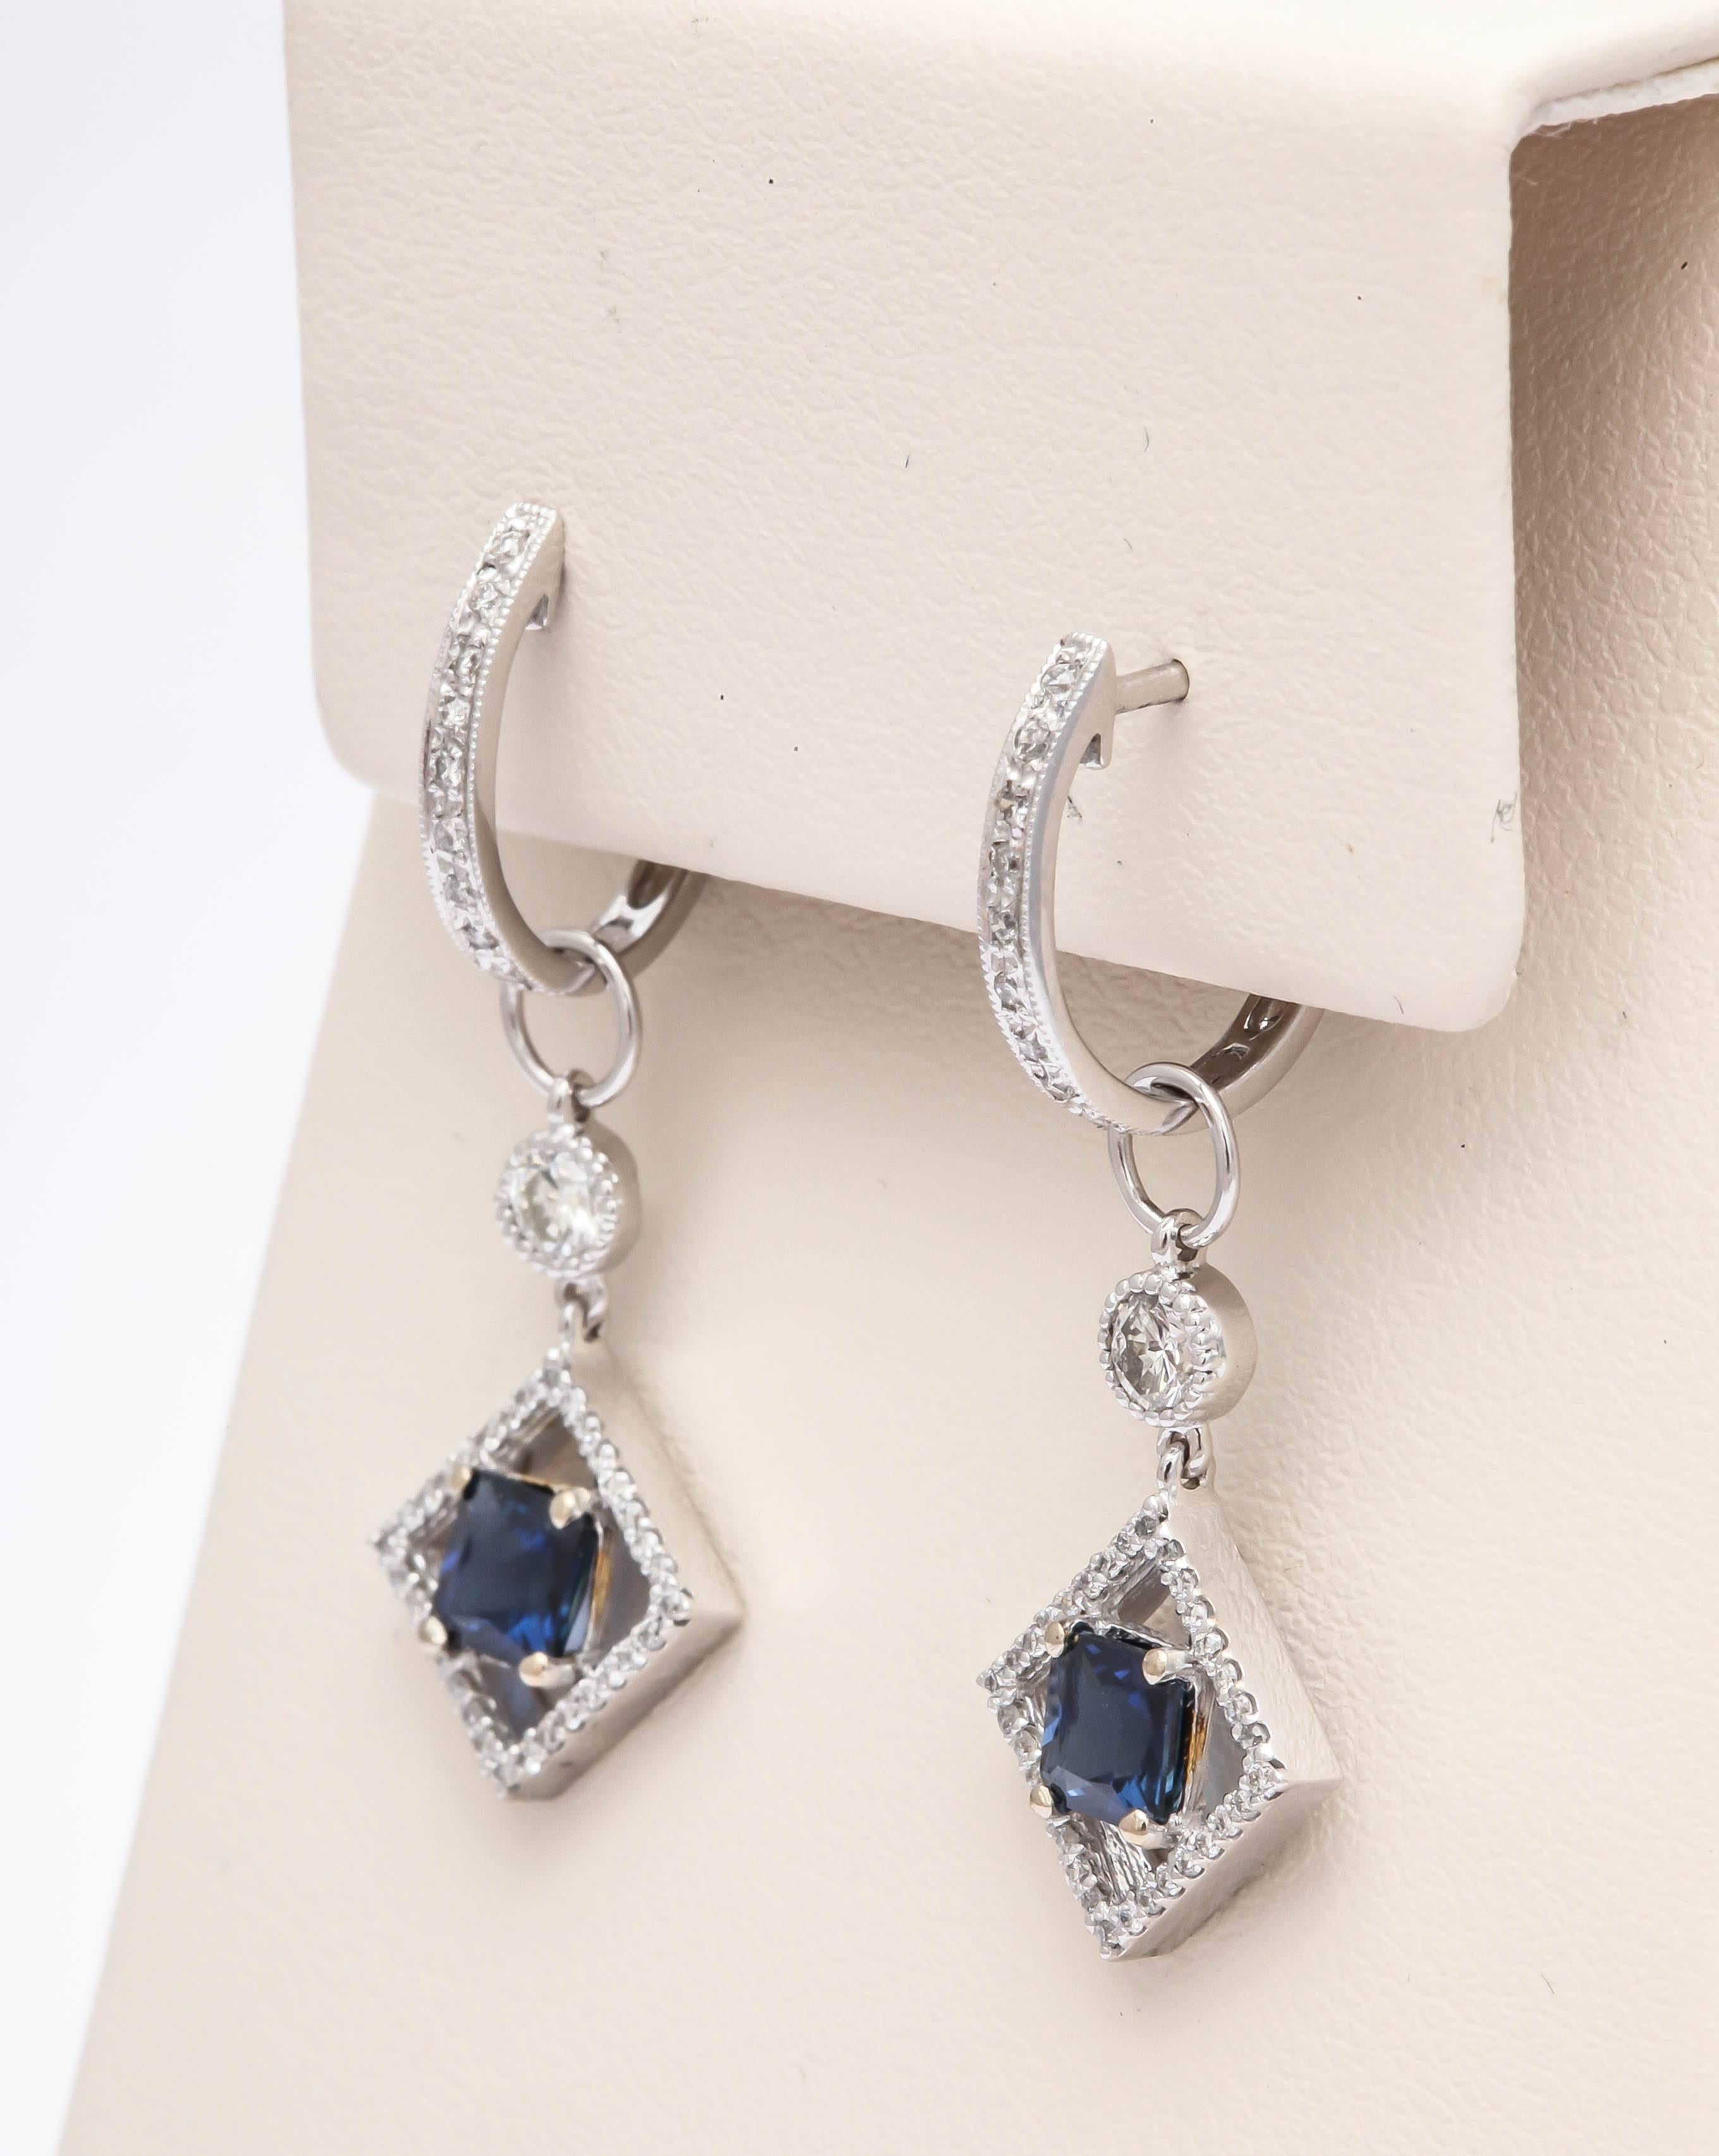 huggie earrings with charms